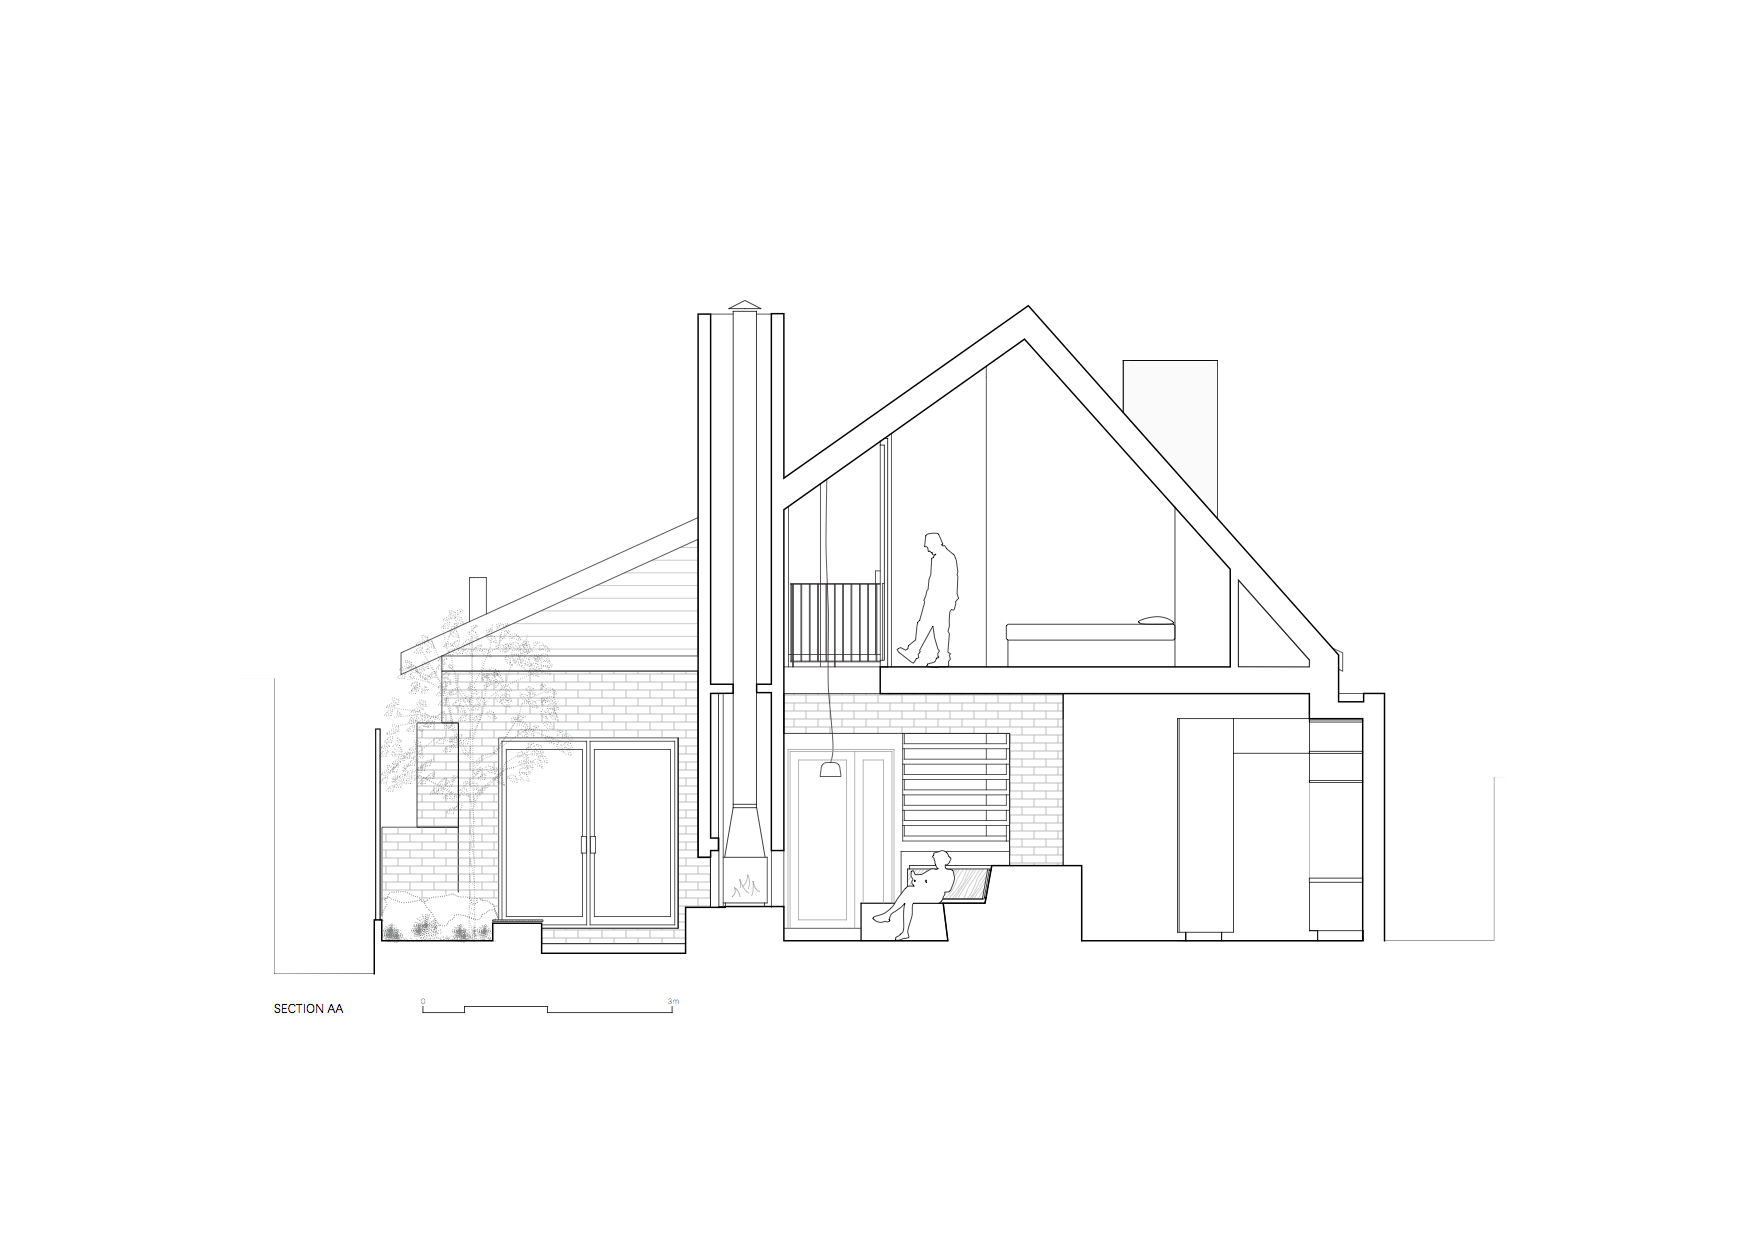 Local House / MAKE architecture (5)